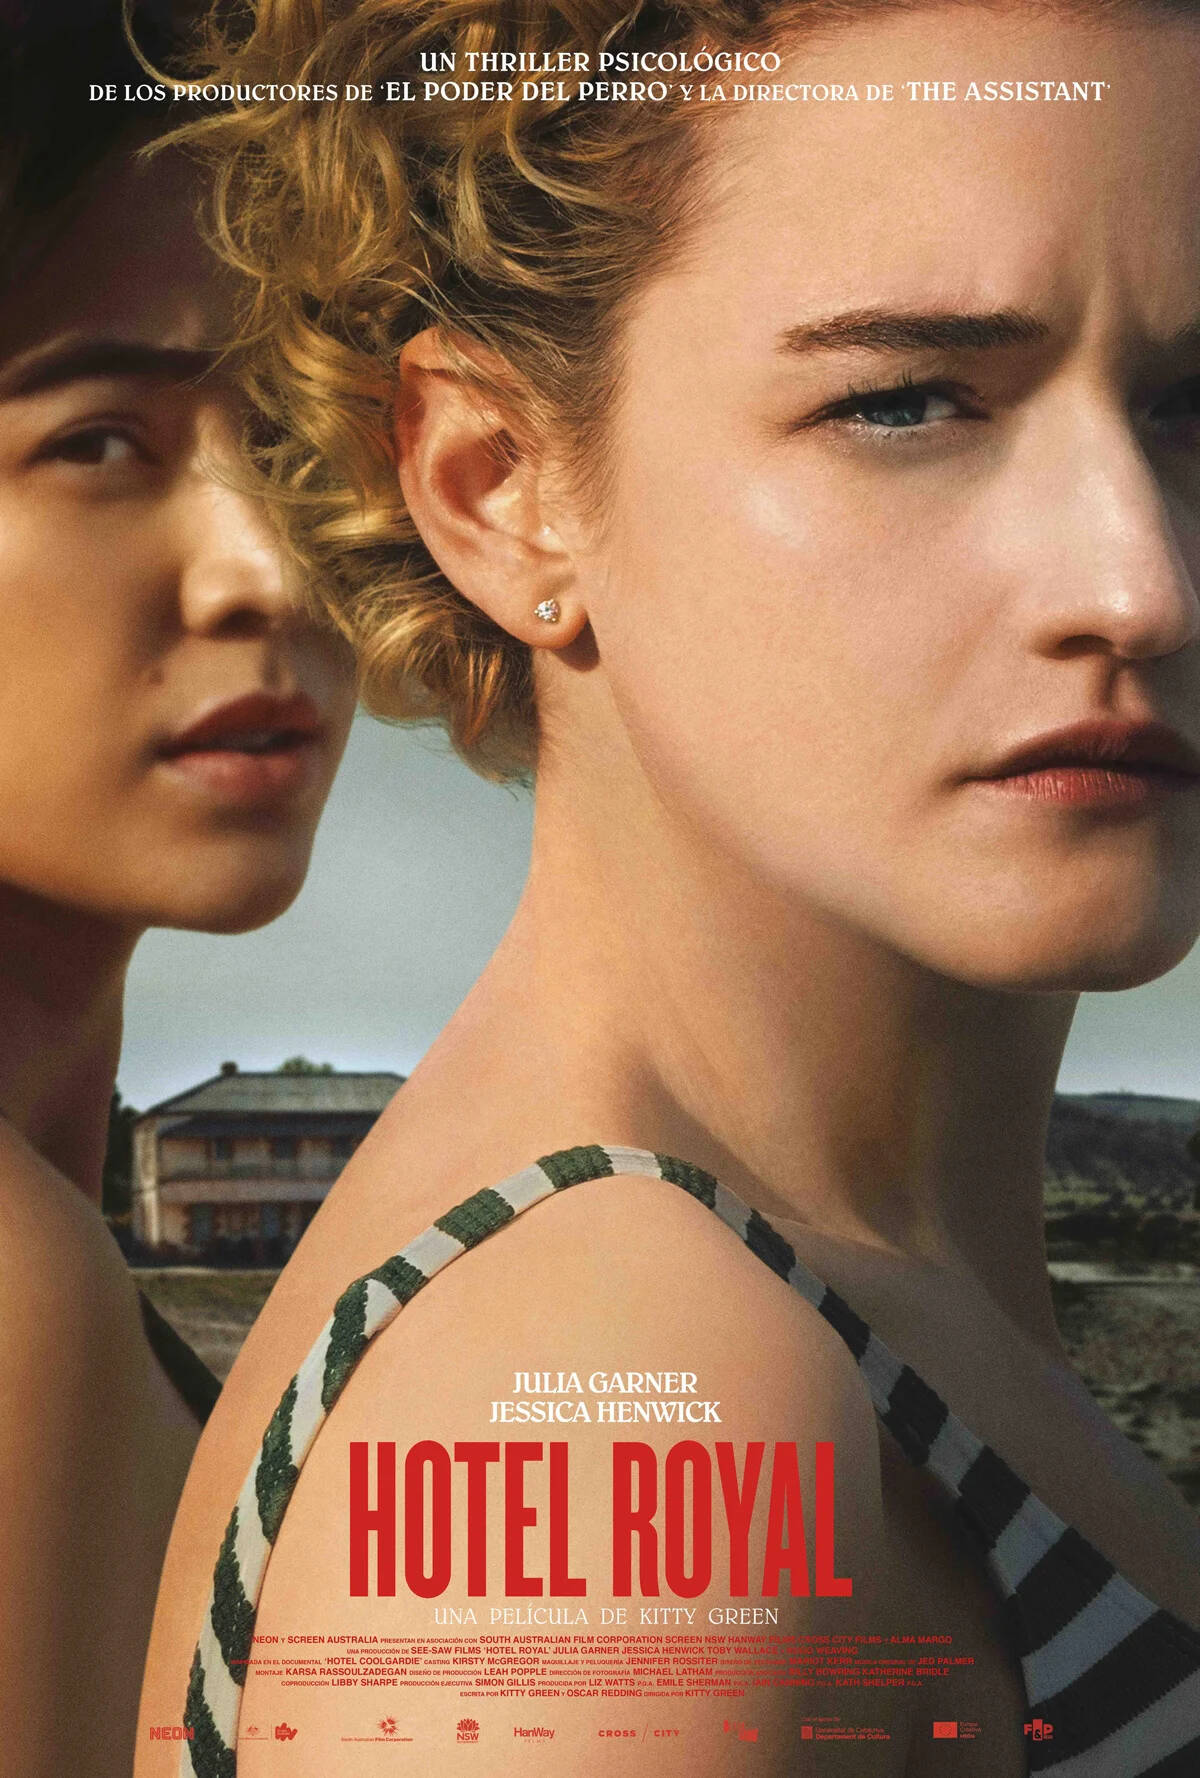 'Hotel Royal'